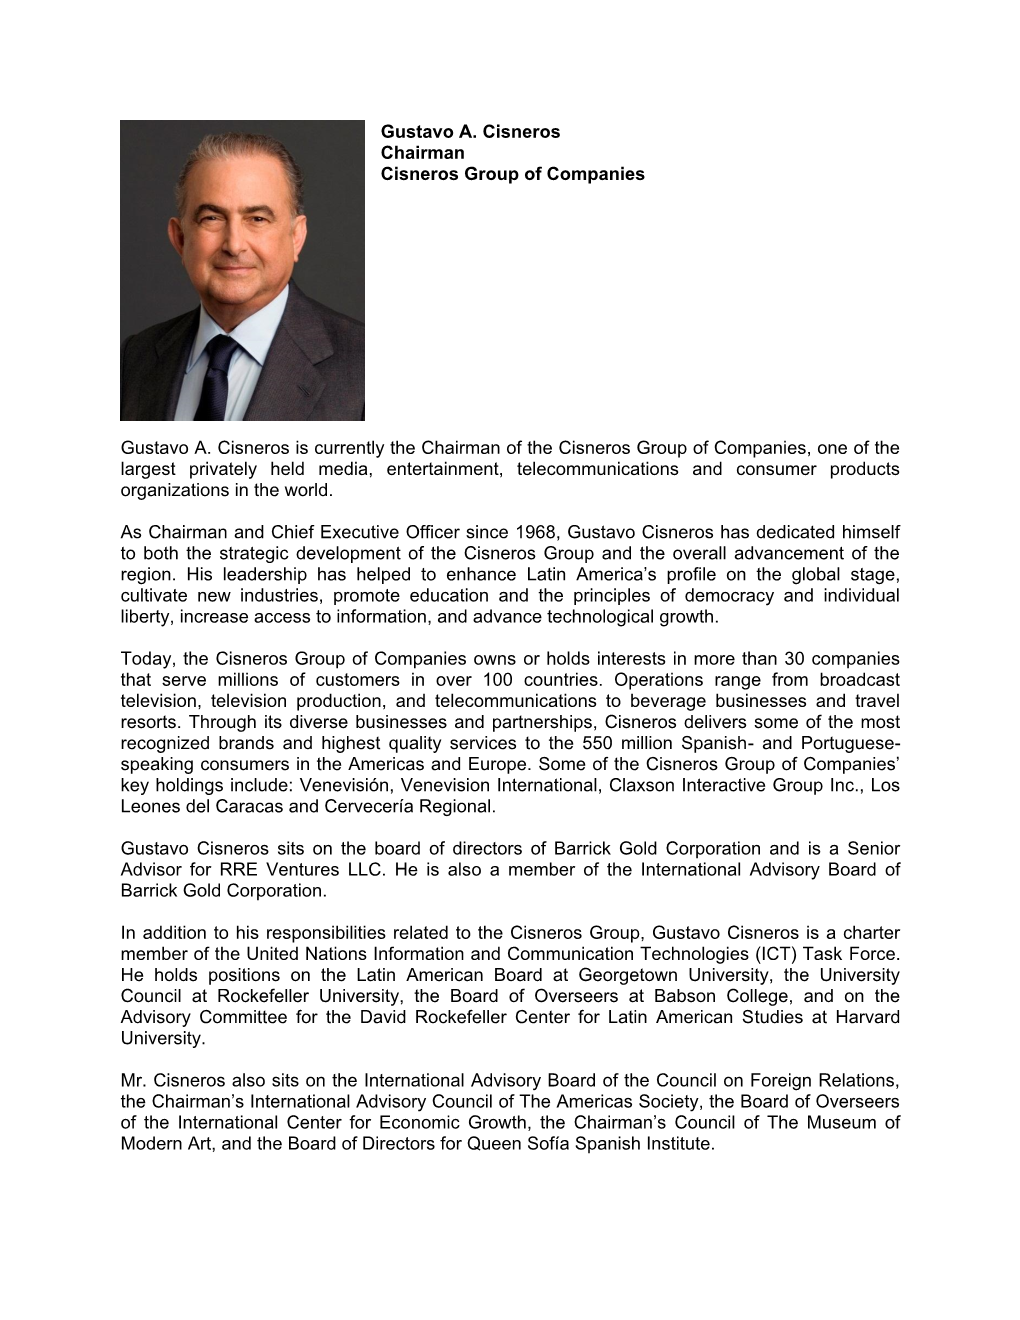 Gustavo A. Cisneros Chairman Cisneros Group of Companies